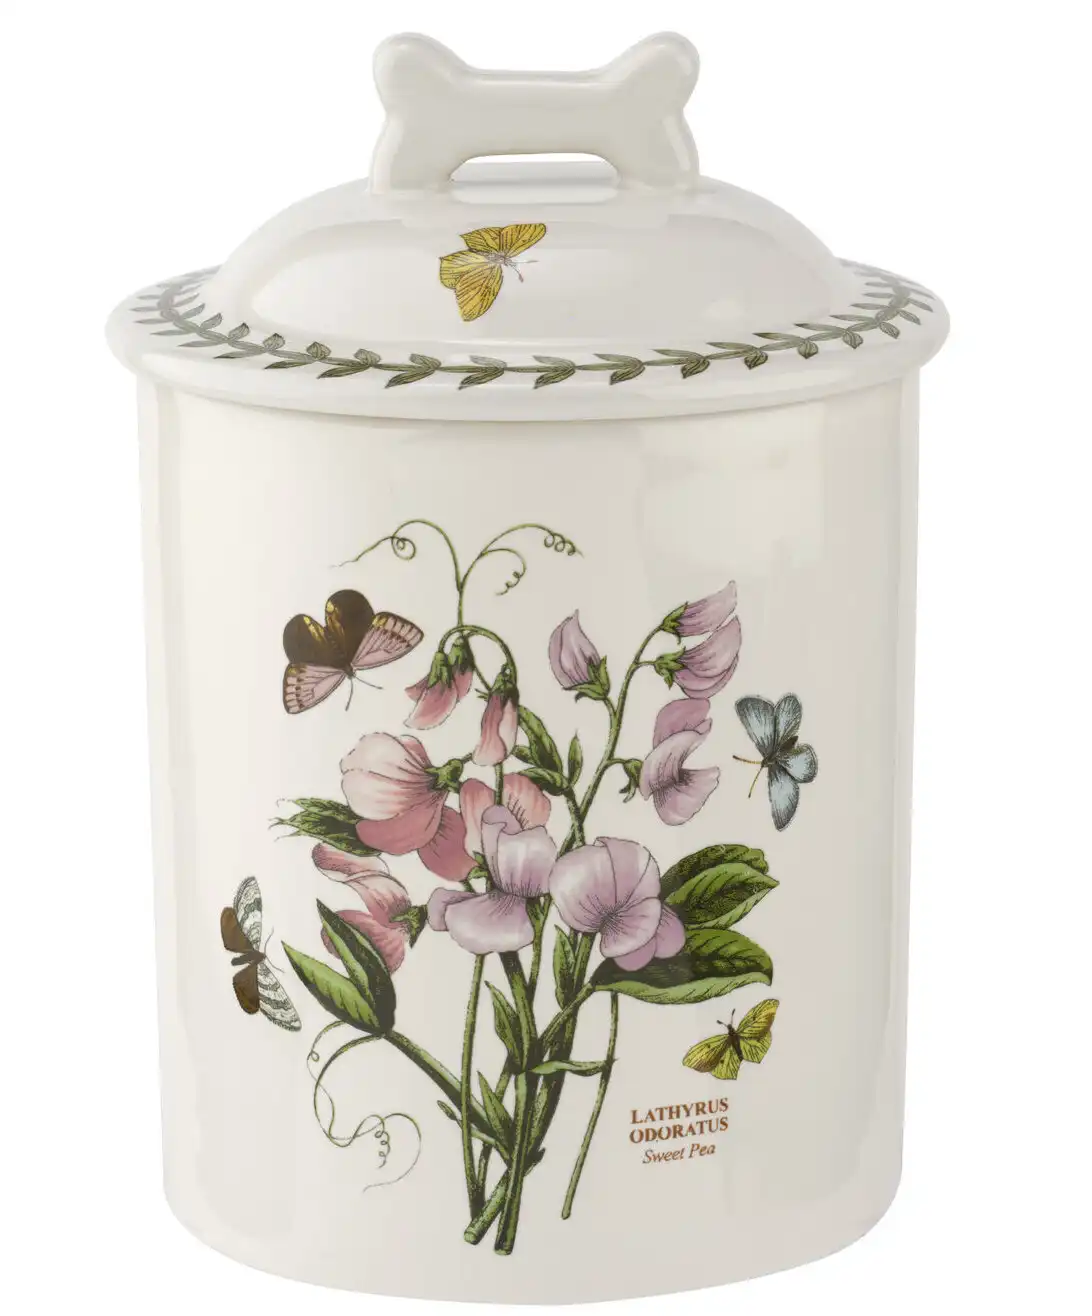 Portmeirion Botanic Garden Treat Jar 7" Sweet Pea & Reviews | Wayfair